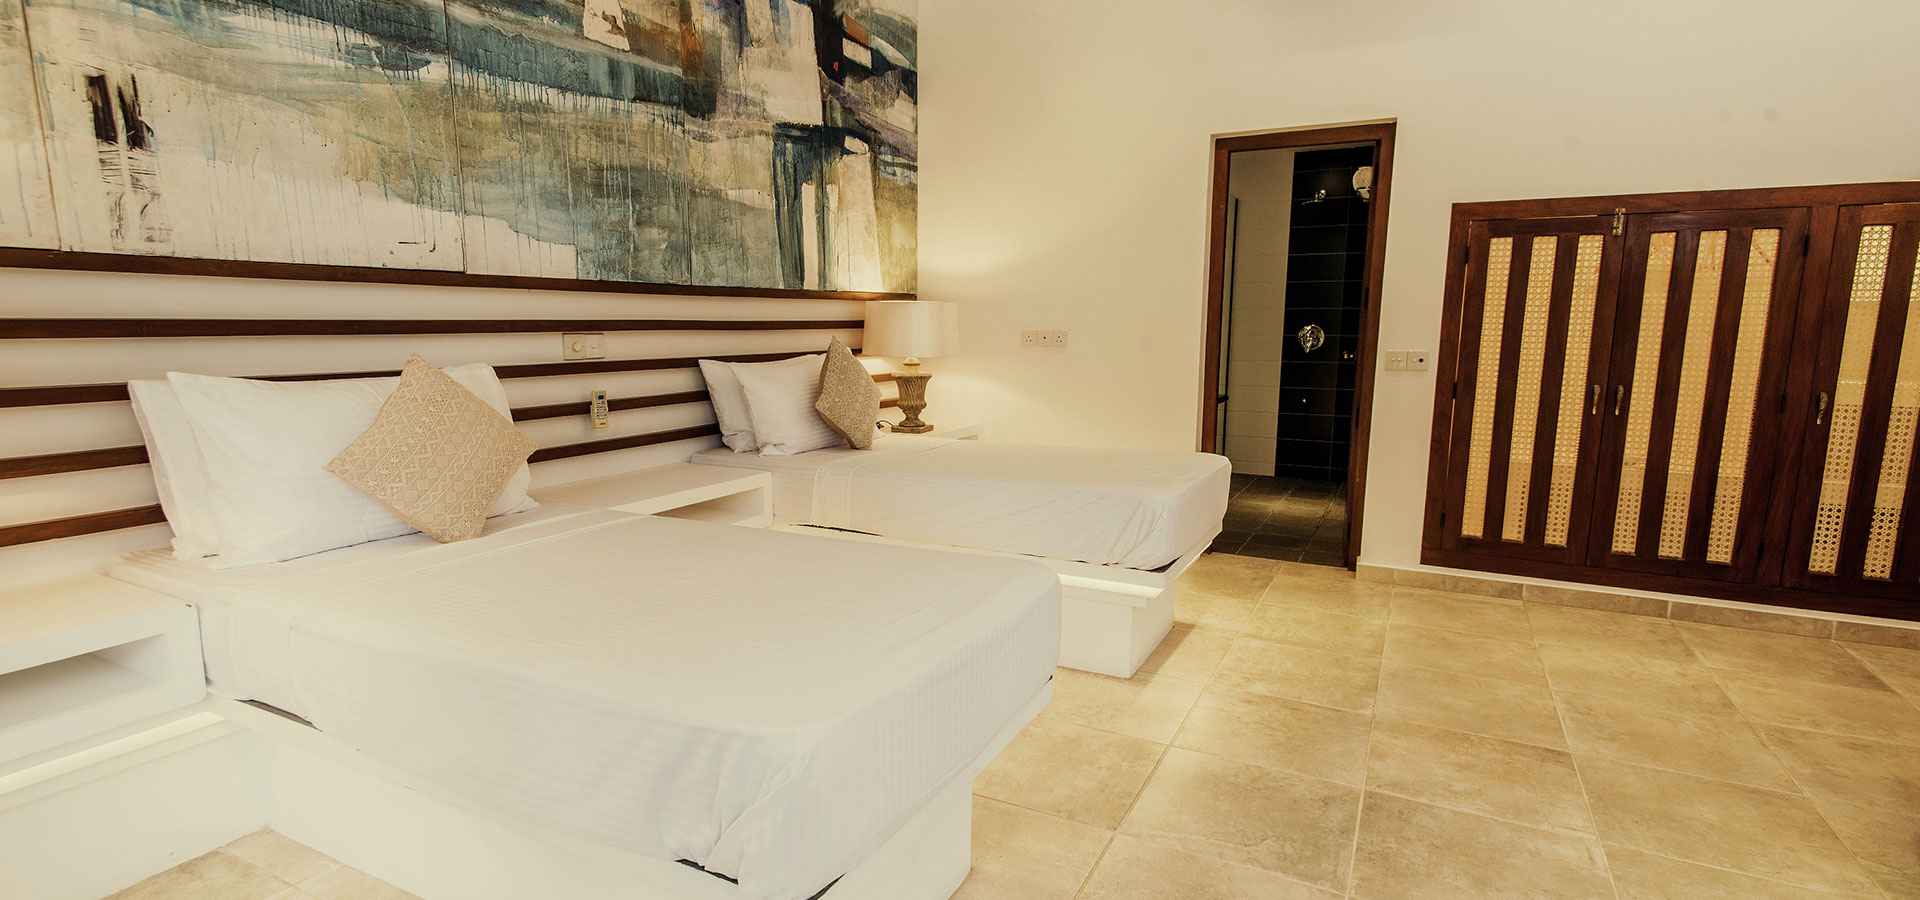 Serendipity_Hotels_twin bedroom at villa thuya